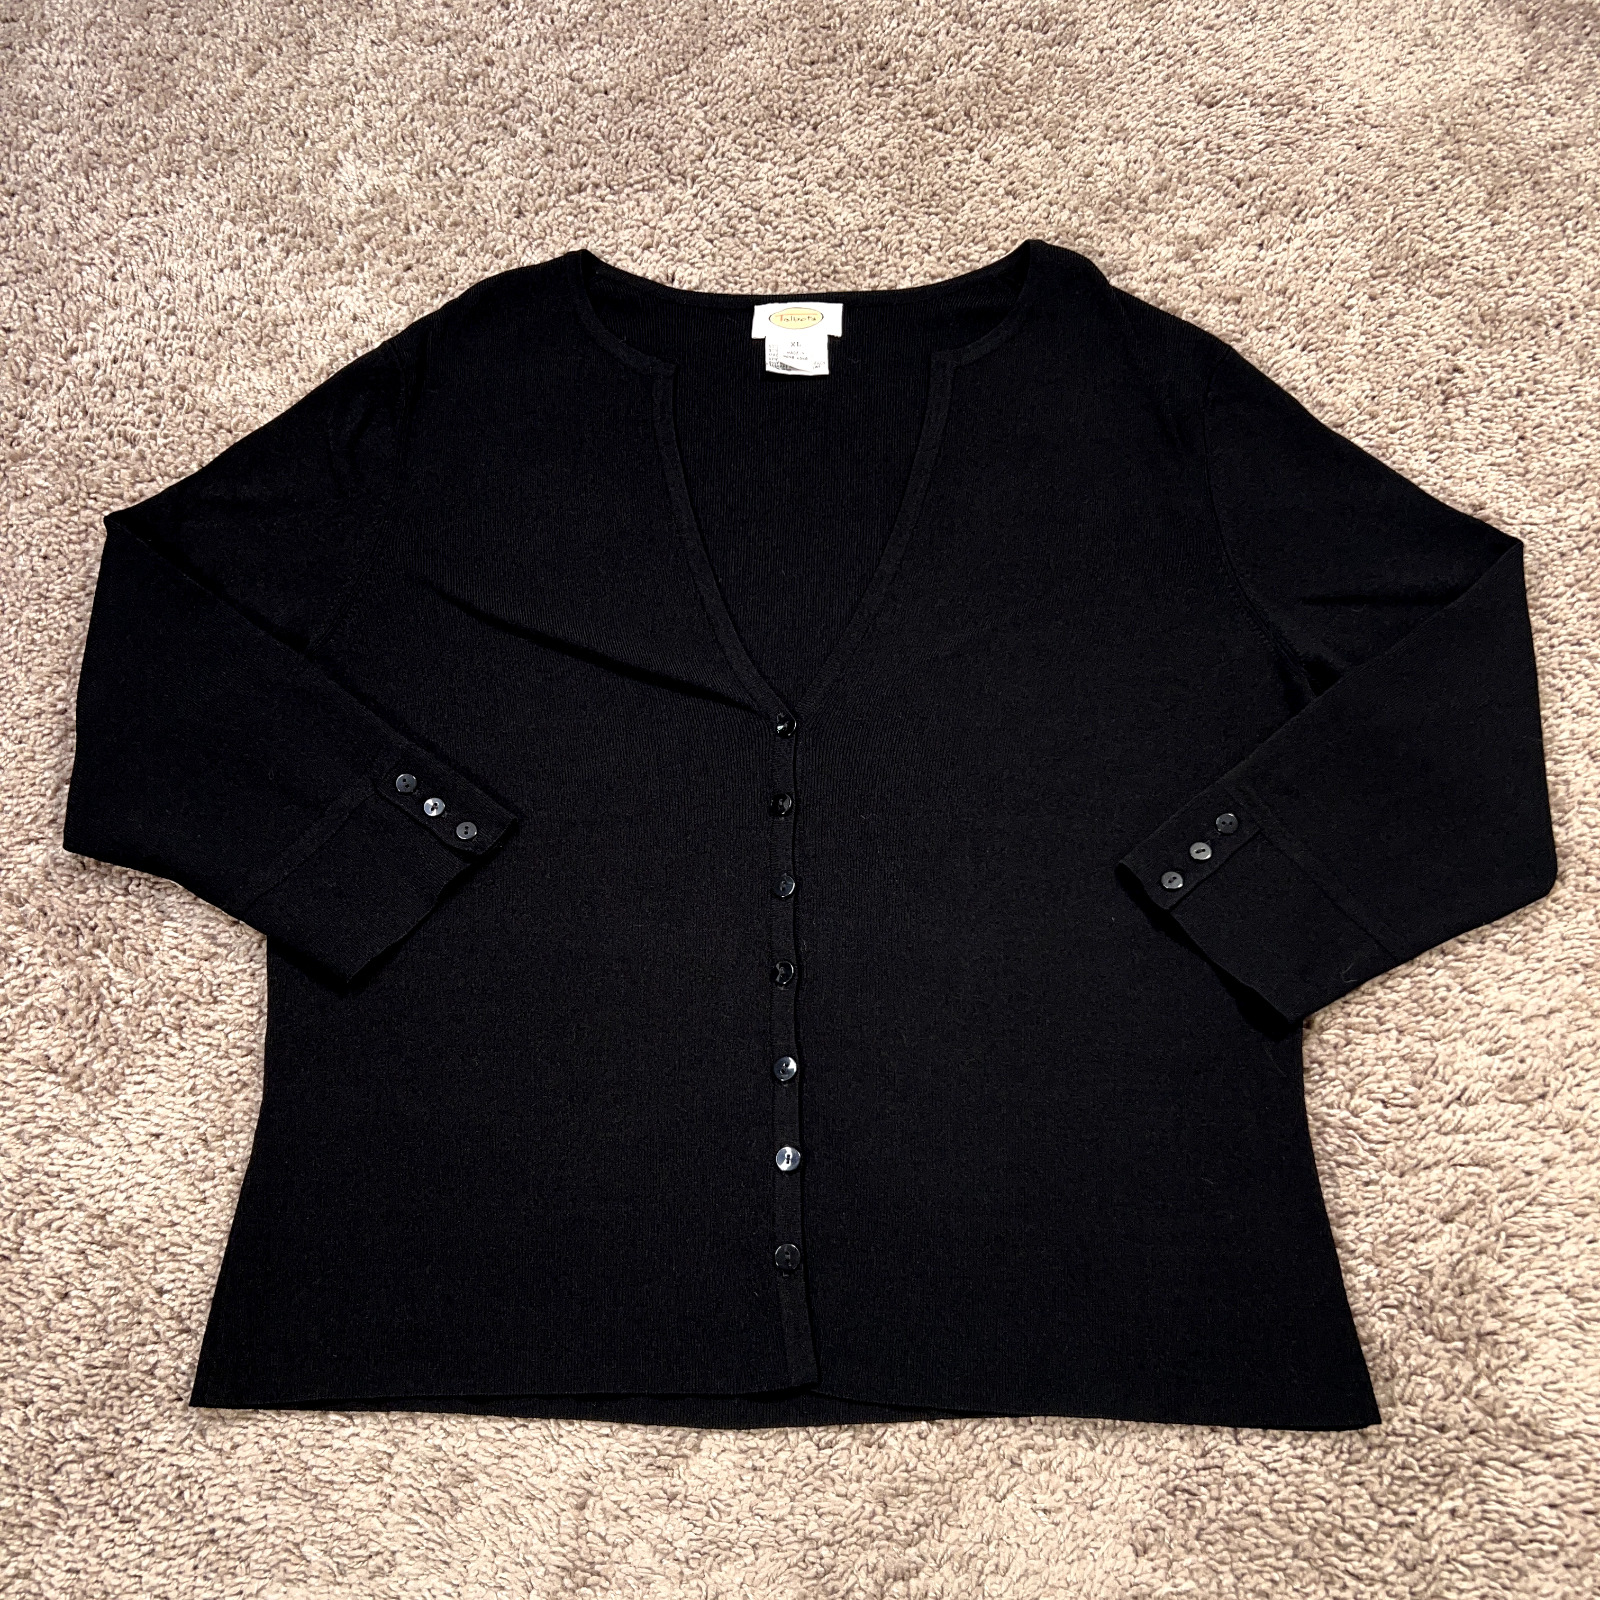 Vintage Talbots Cardigan Womens XL Black Button Up Sweater Classic Minimalist